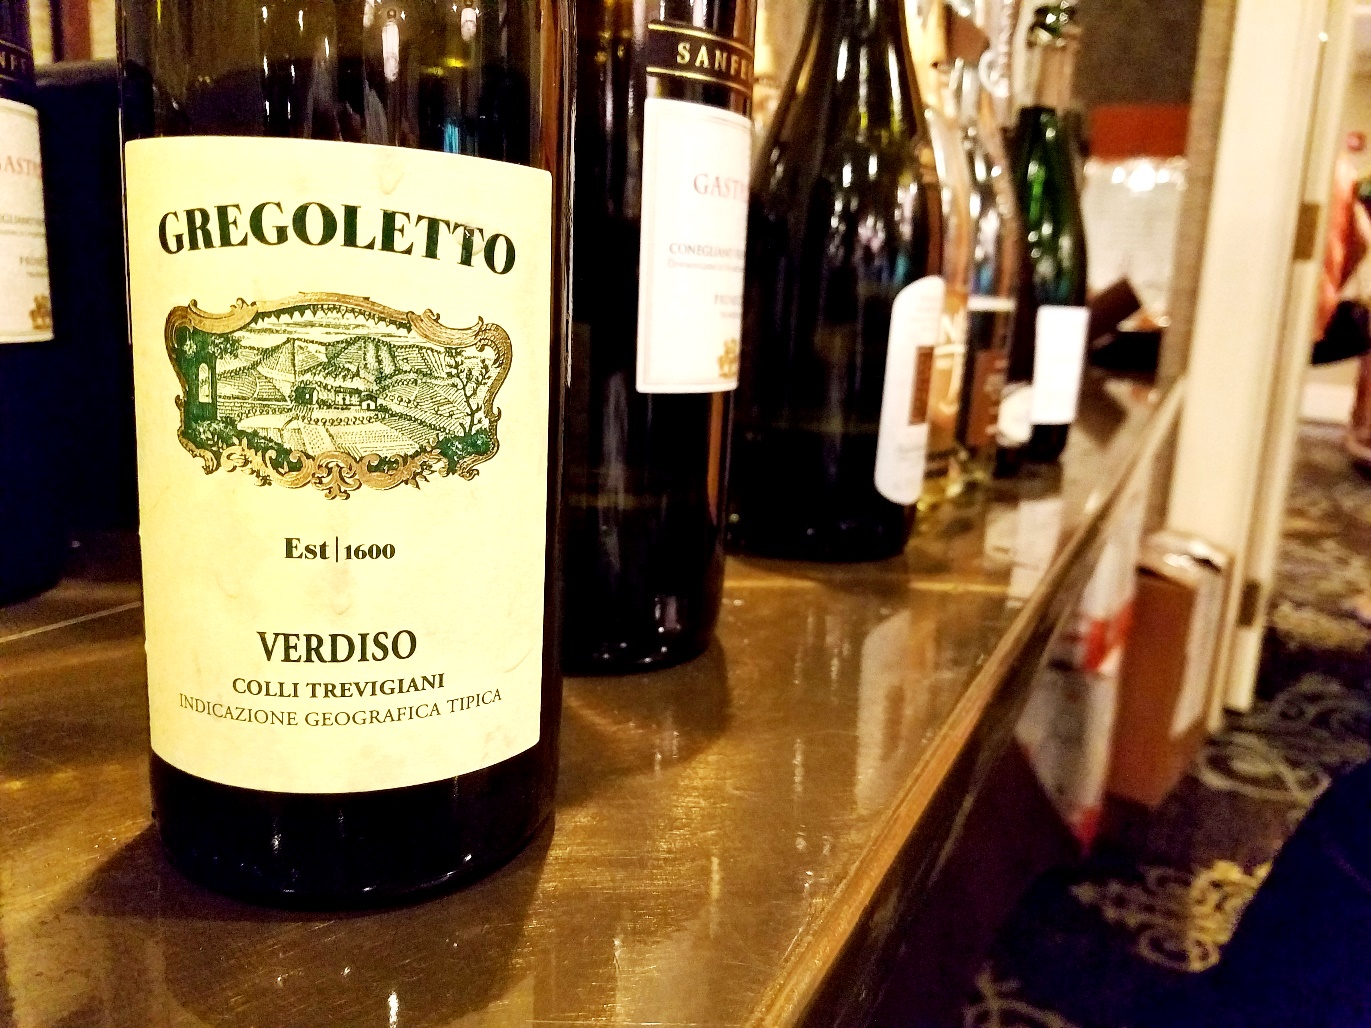 Gregoletto, Colli Trevigiani Verdiso IGT 2016, Veneto, Italy, Wine Casual